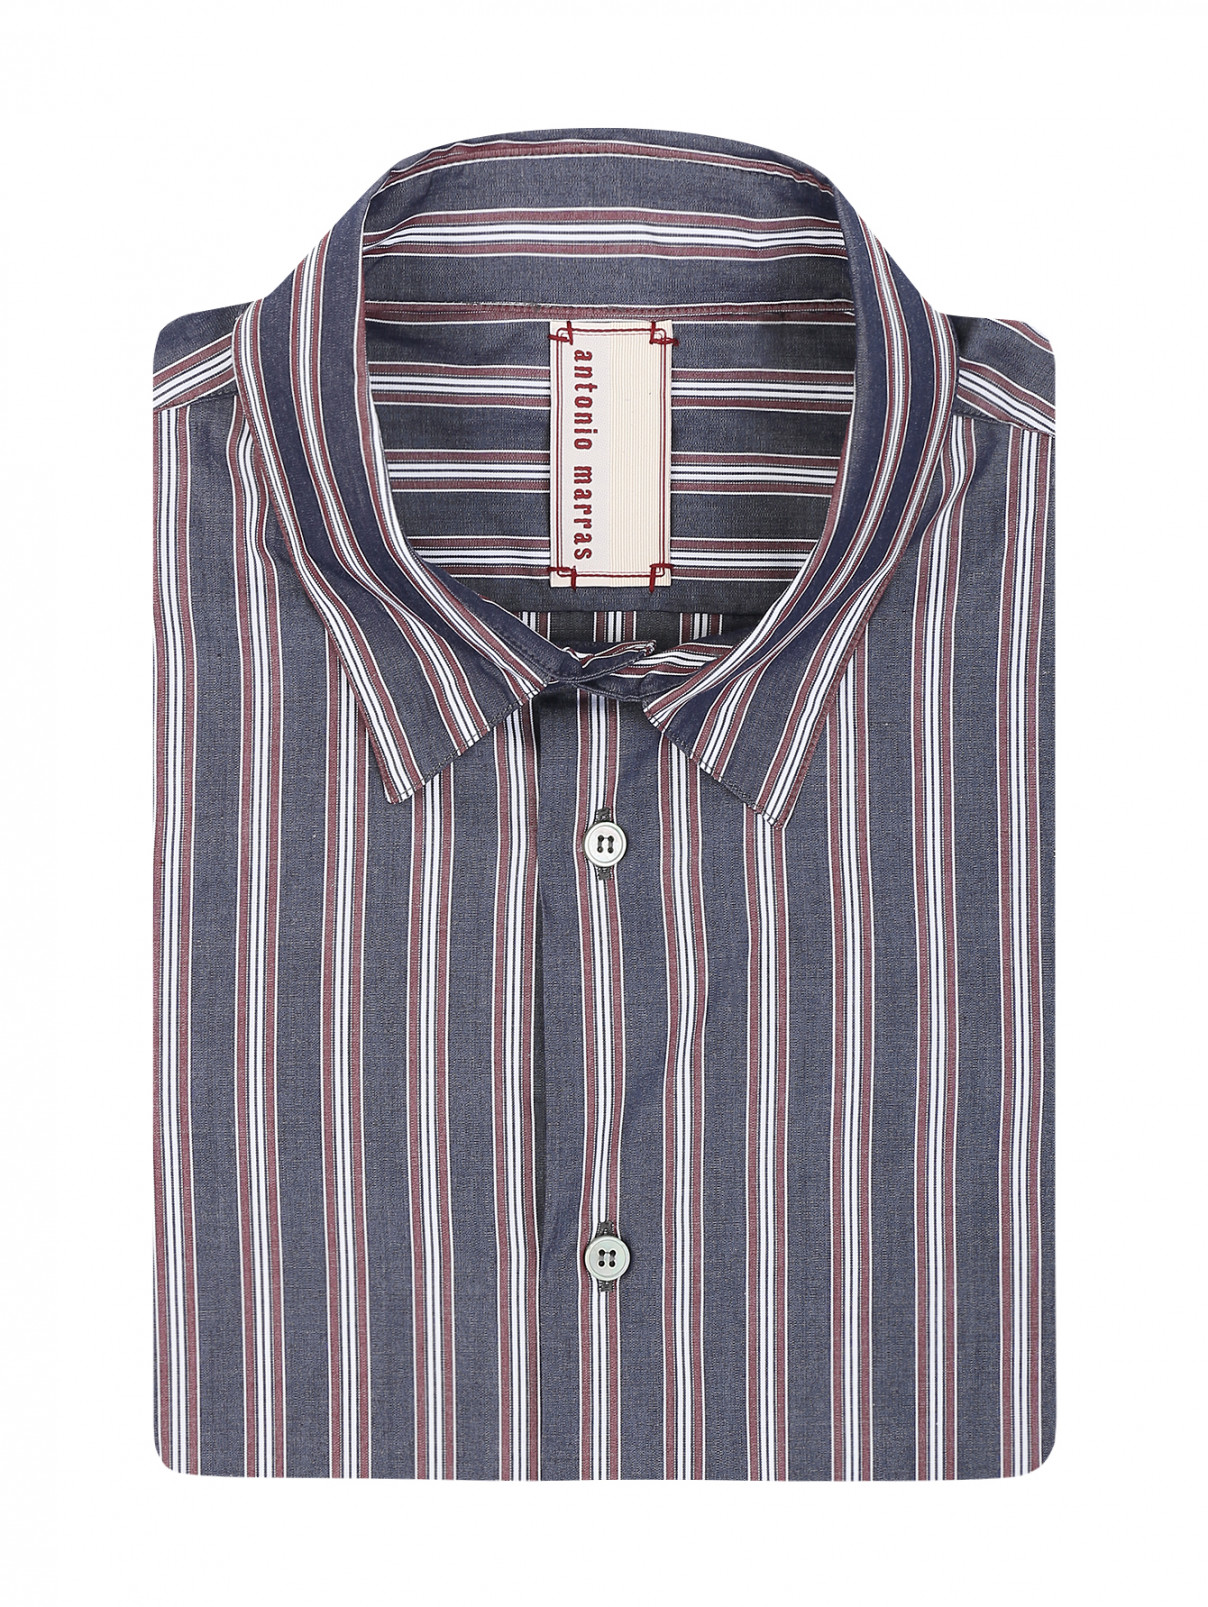 Рубашка из хлопка с коротким рукавом Antonio Marras  –  Общий вид  – Цвет:  Узор